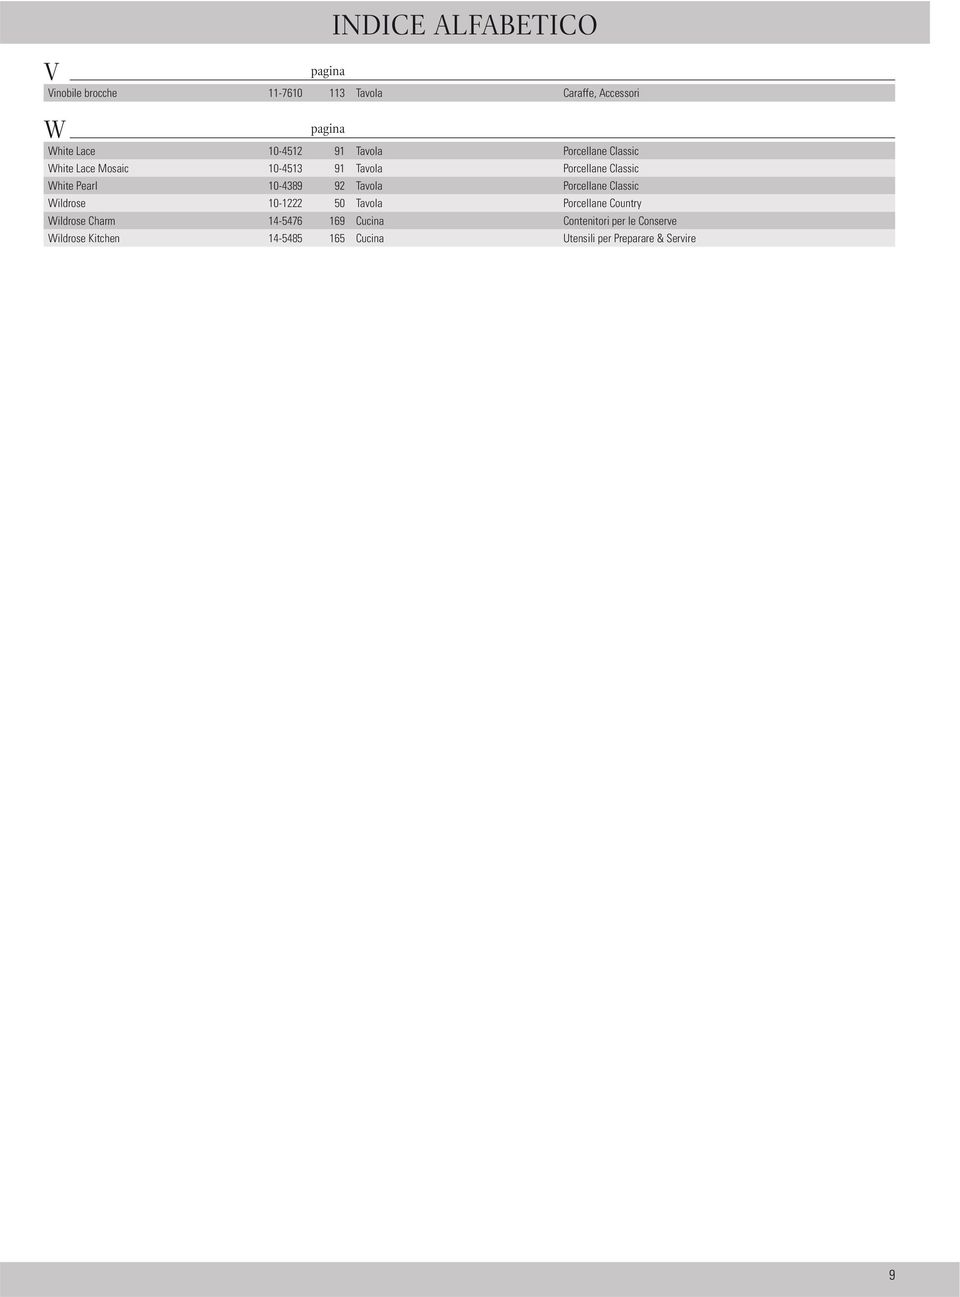 10-4389 92 Tavola Porcellane Classic Wildrose 10-1222 50 Tavola Porcellane Country Wildrose Charm 14-5476